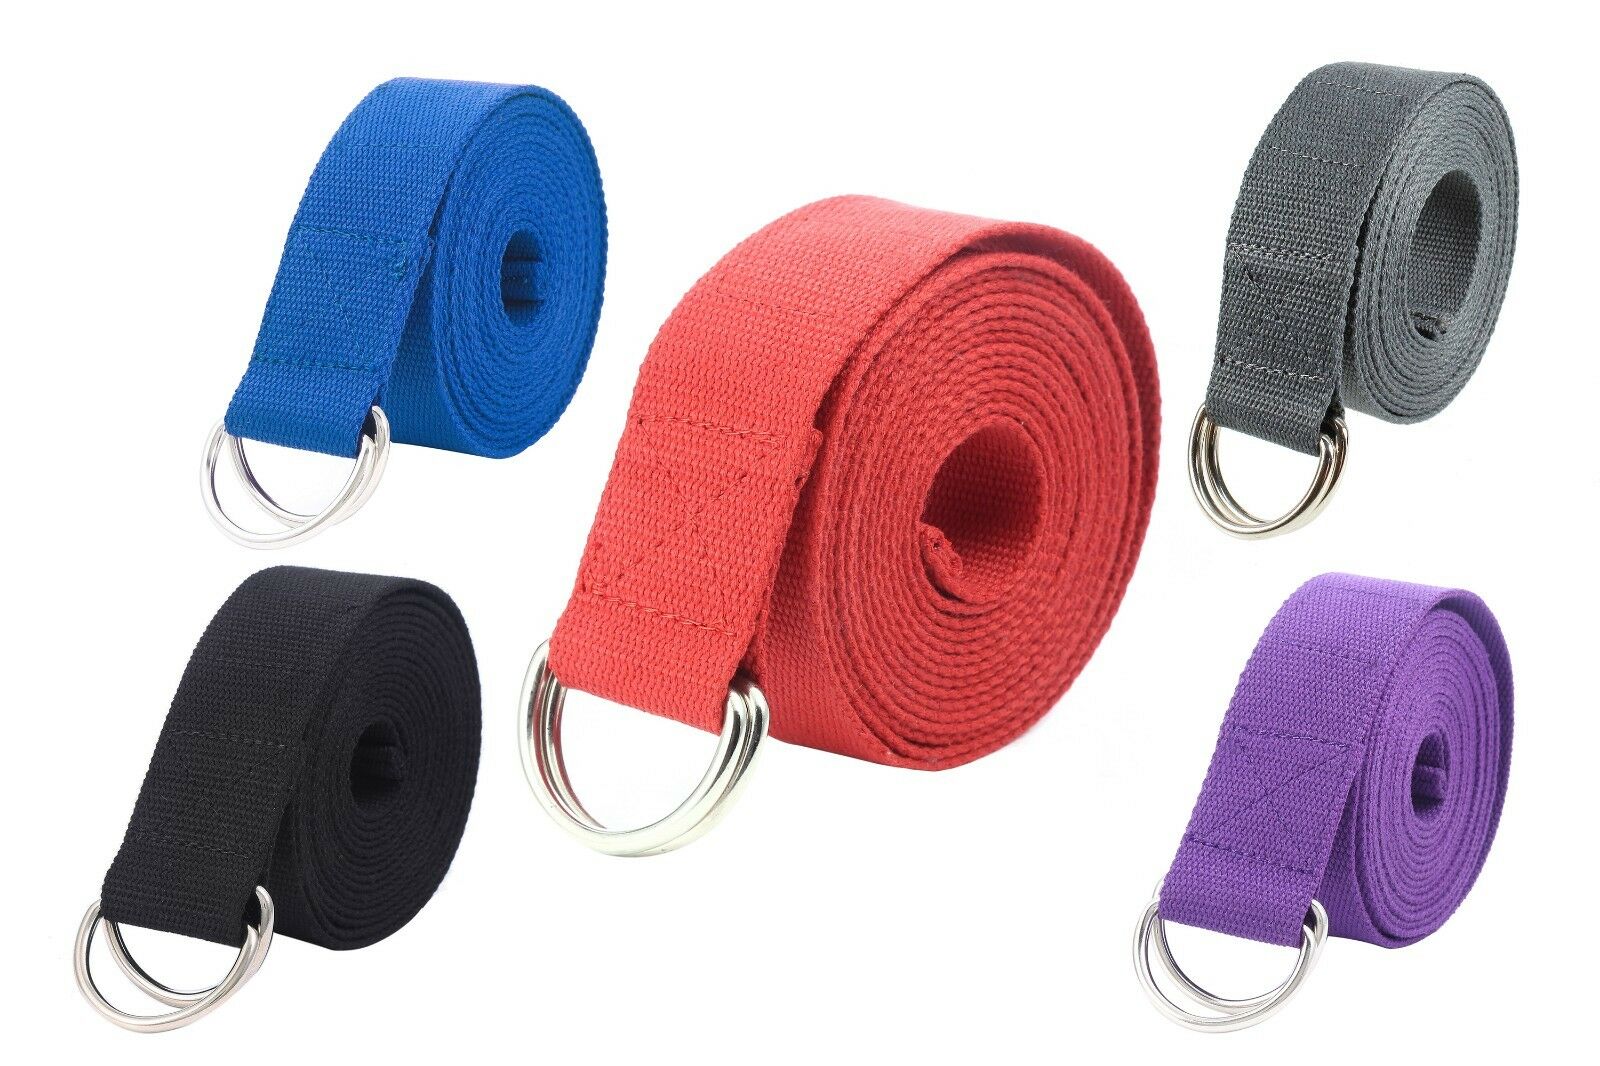 Gelante Fitness Exercise Yoga Strap - Durable Cotton 10 Feet Long Metal D-ring